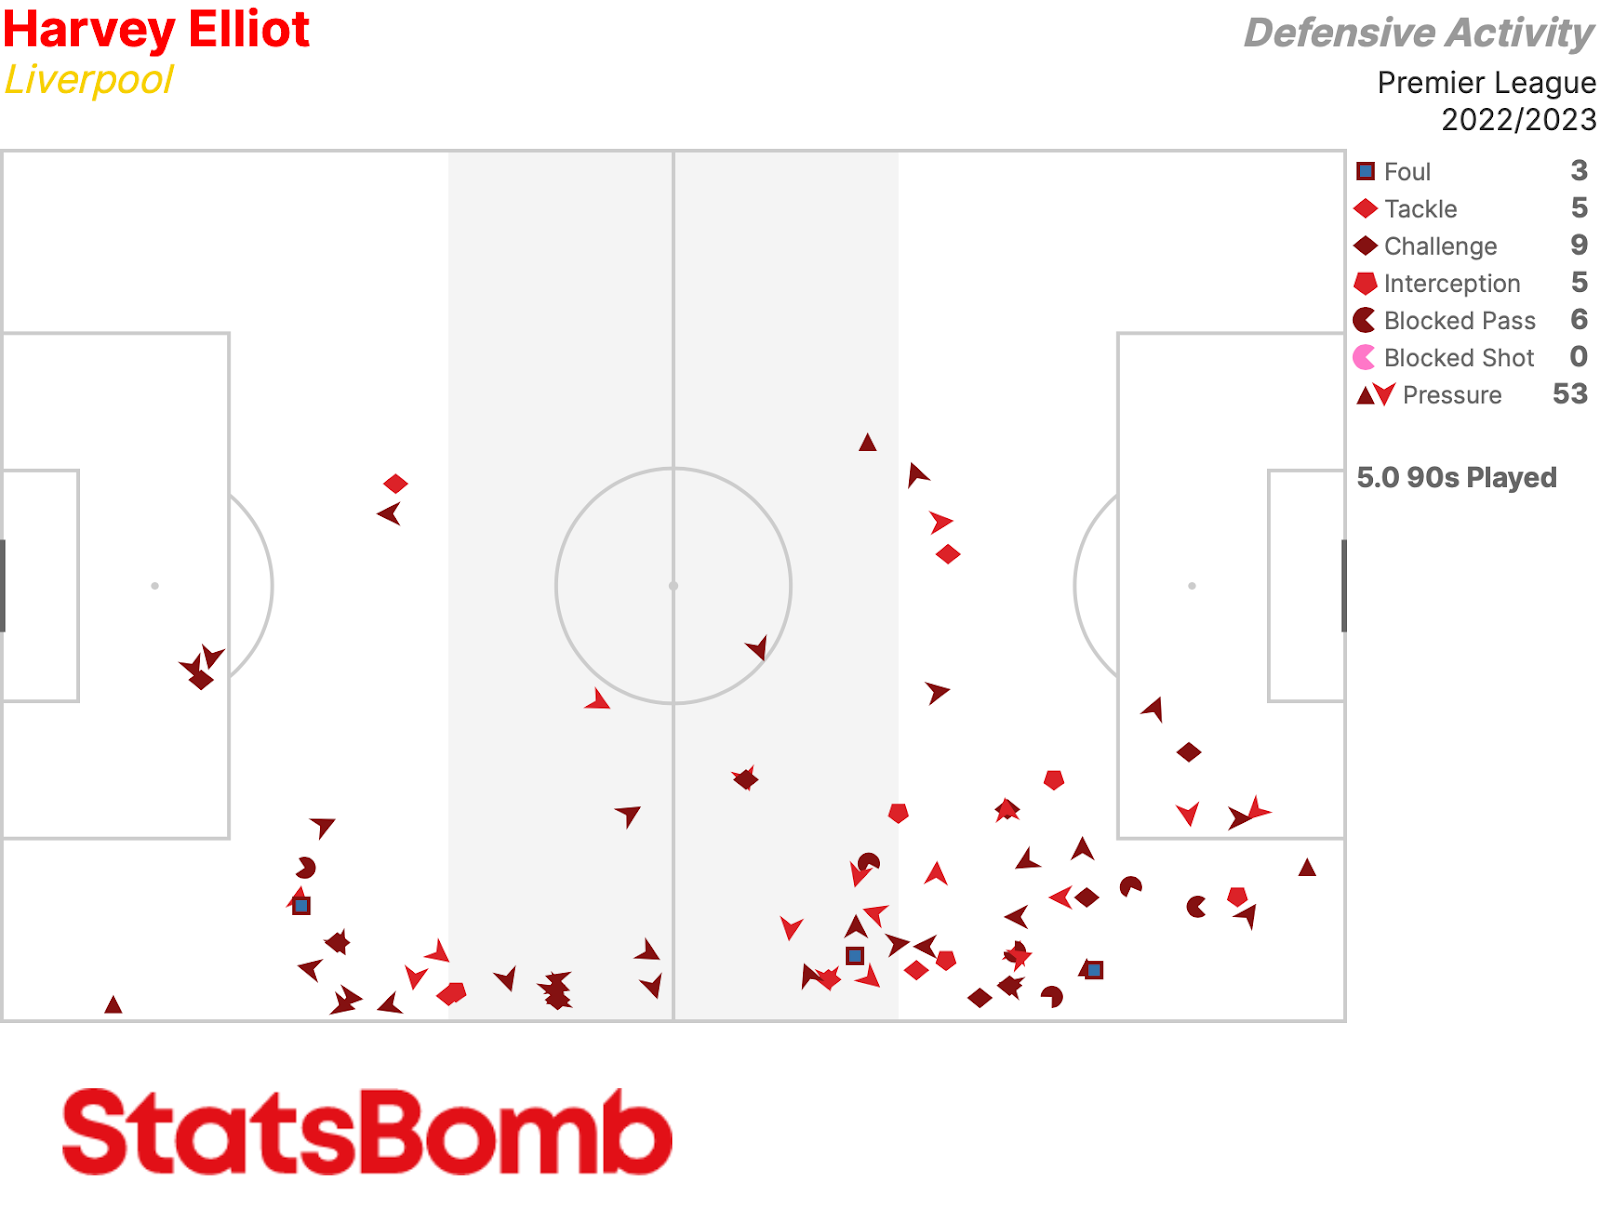 Harvey Elliott's defensive activity courtesy of StatsBomb